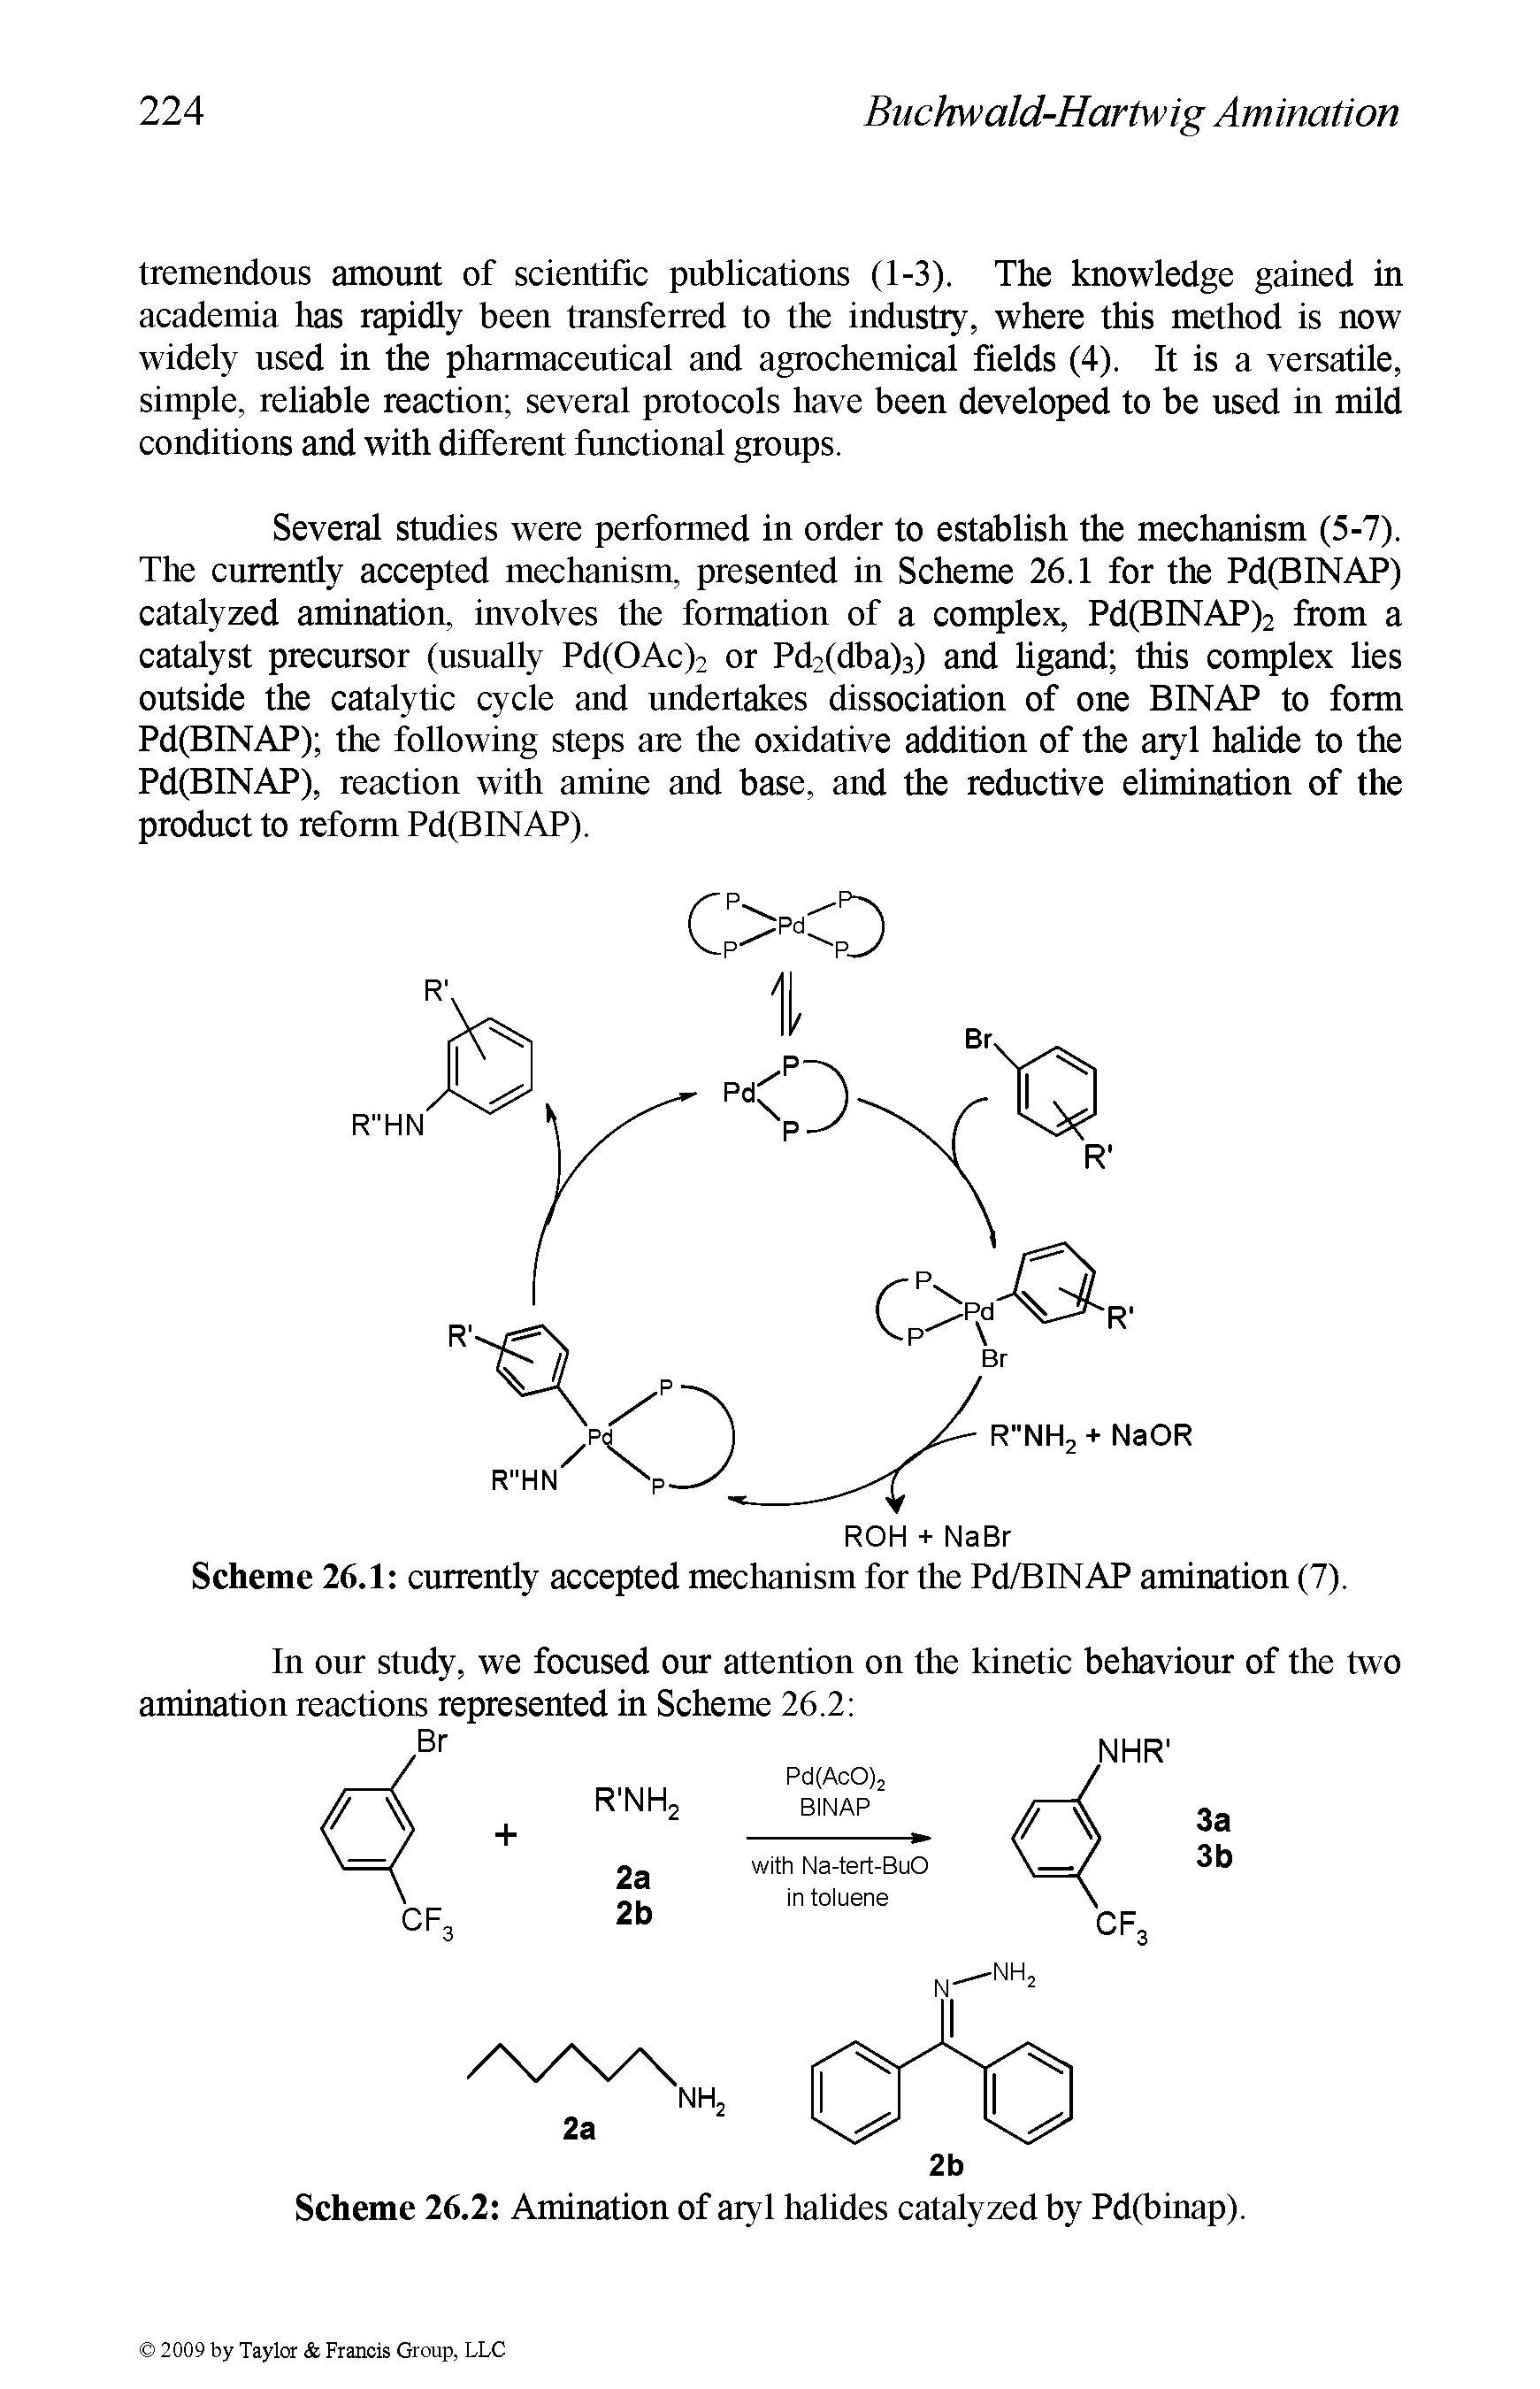 Scheme 26.2 Amination of aryl halides catalyzed by Pd(binap).